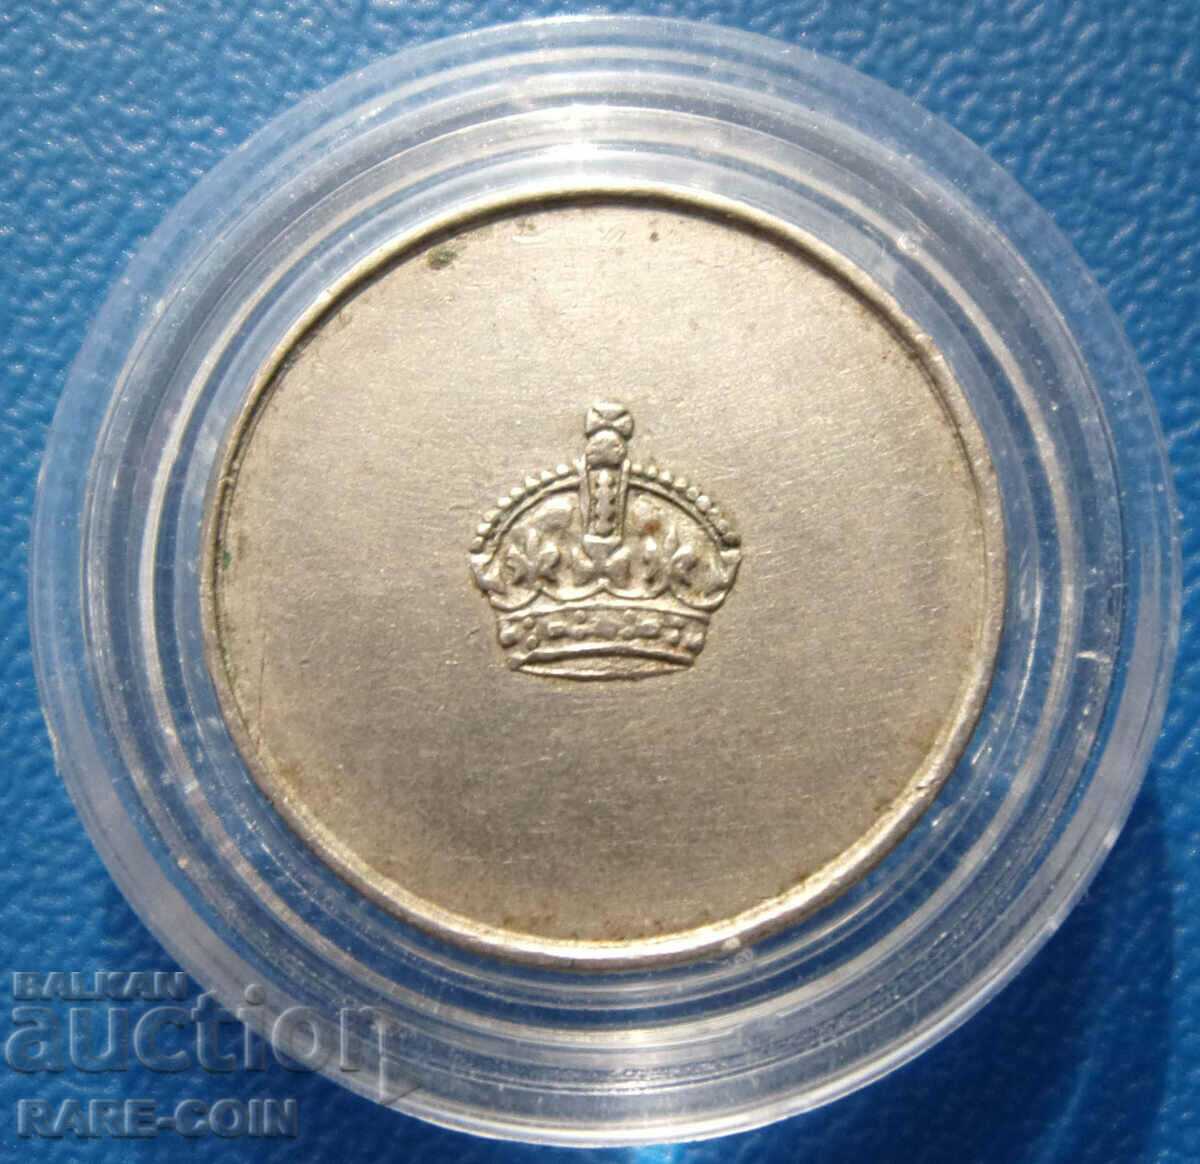 RS (9) Ceylon 10 Cent 1942 - Σπάνιο νόμισμα